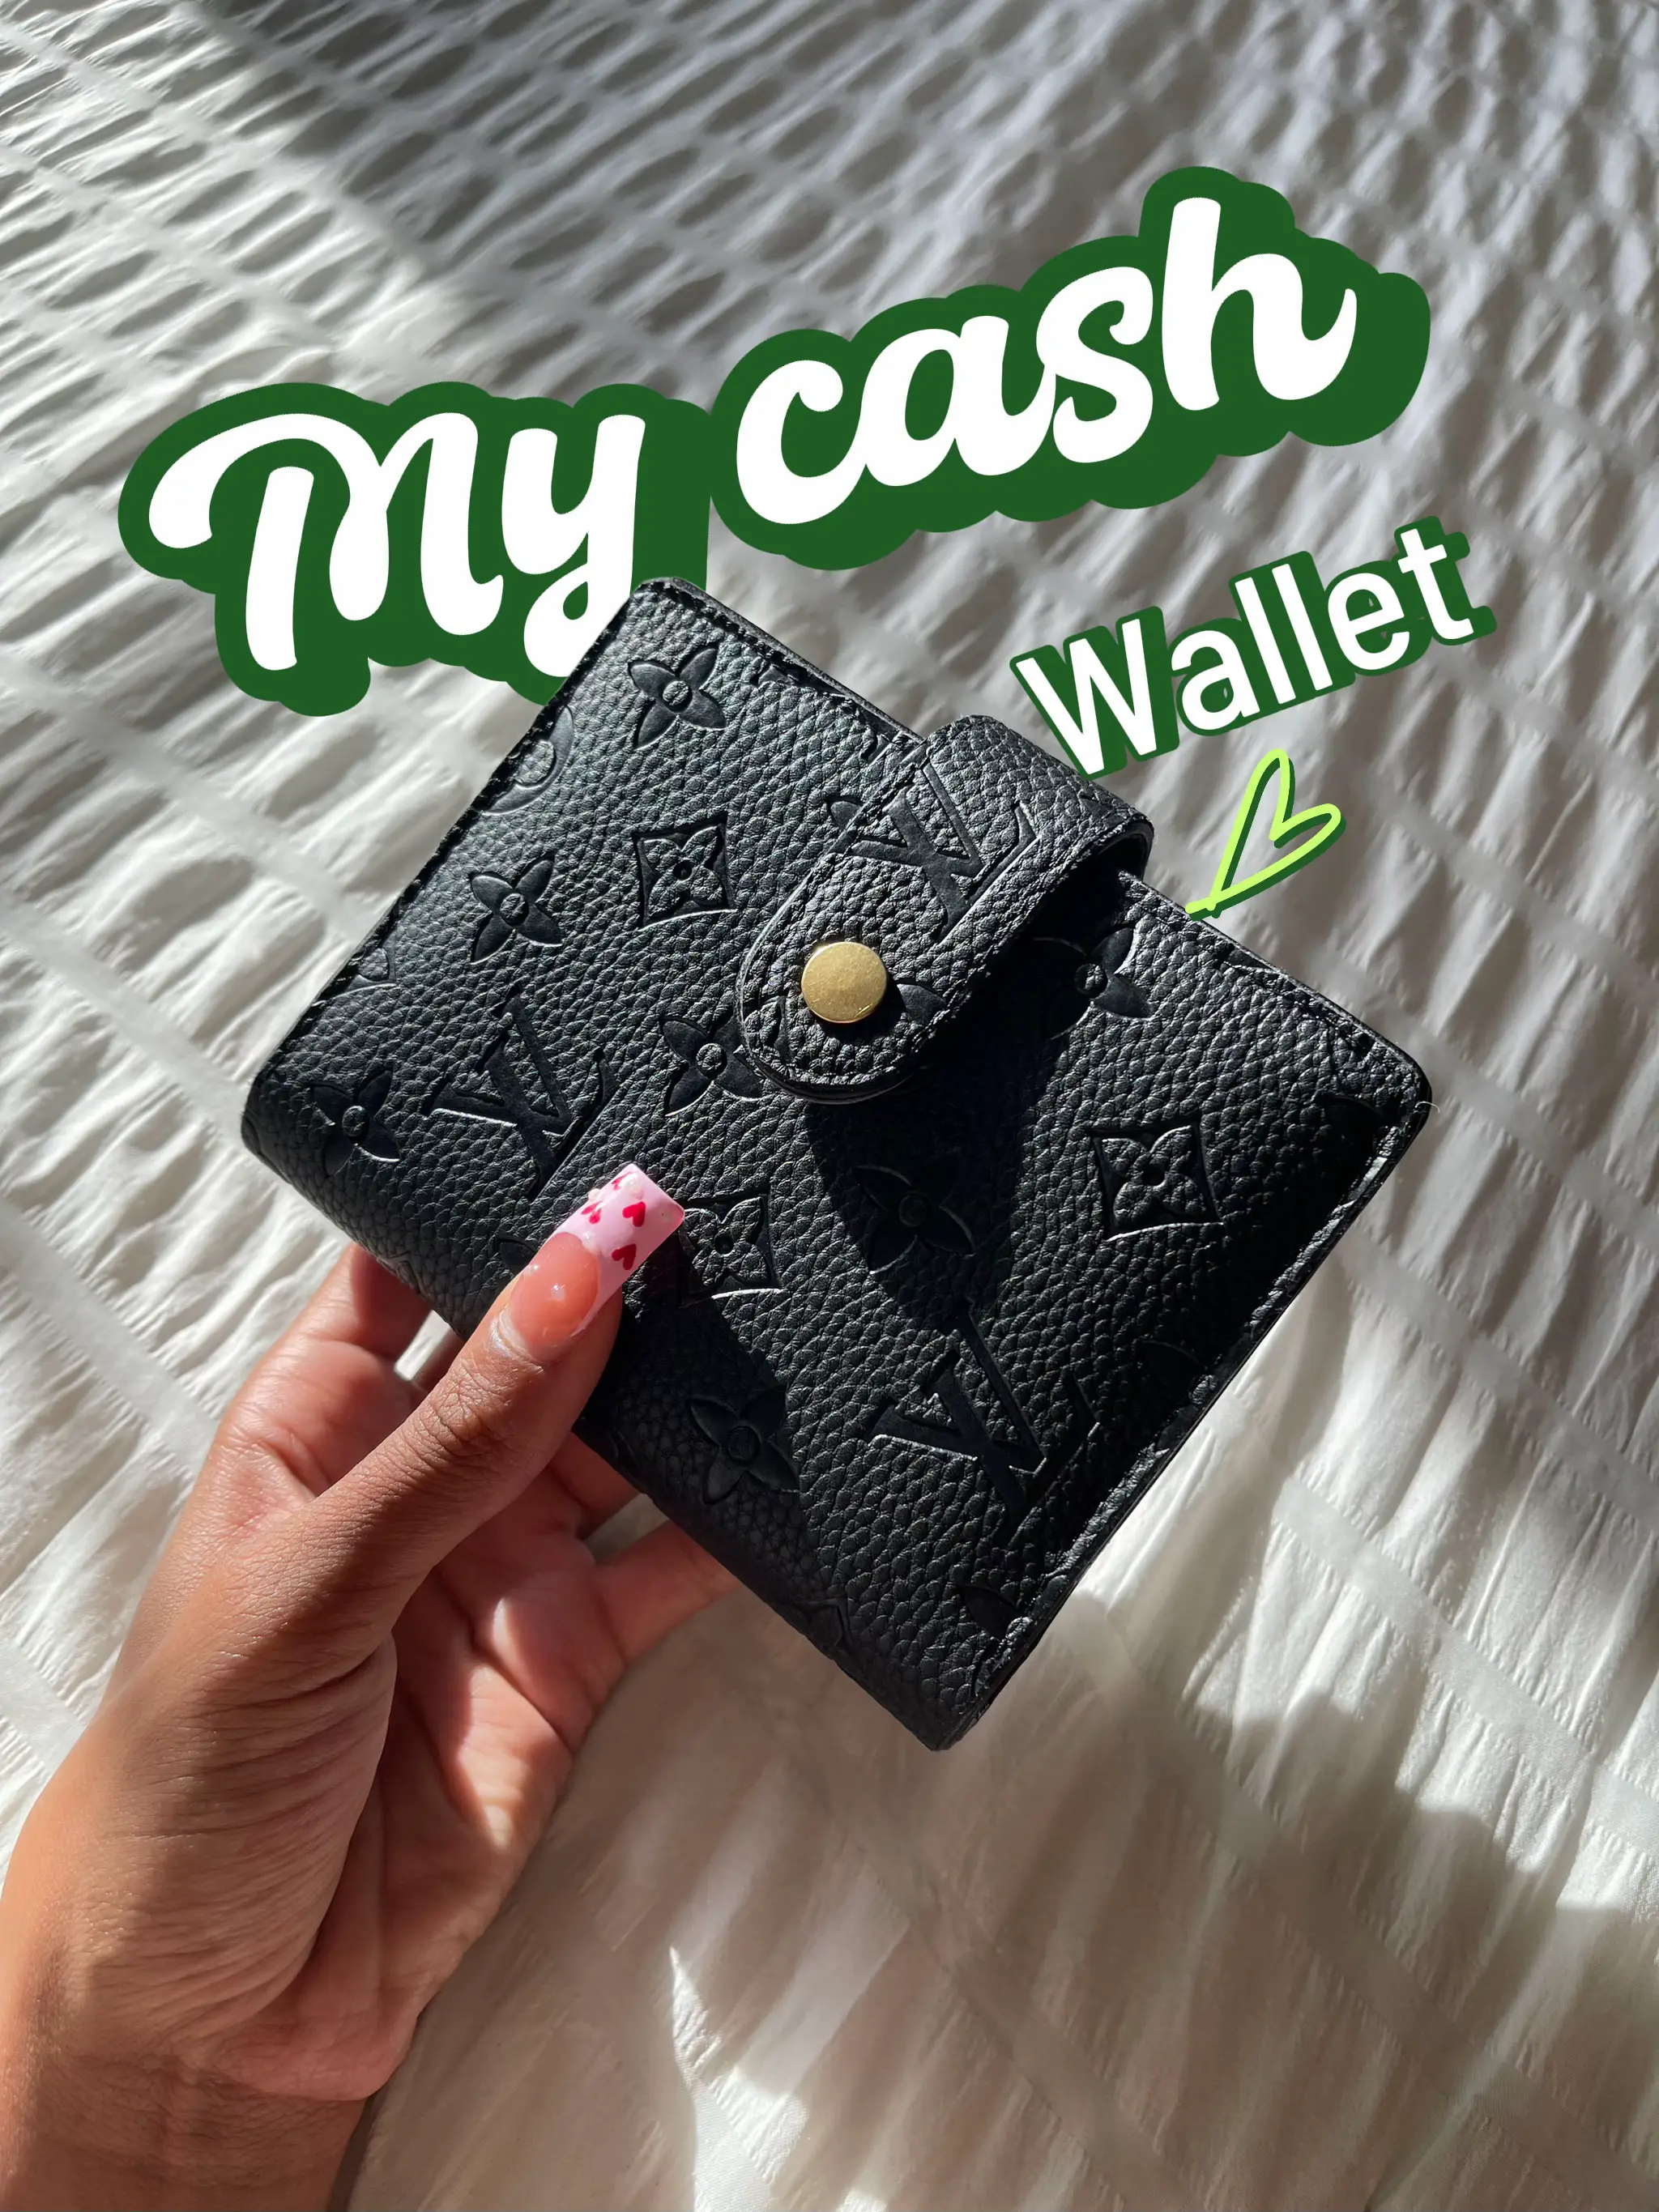 Cash Stuffing Method : Your Cash Wallet